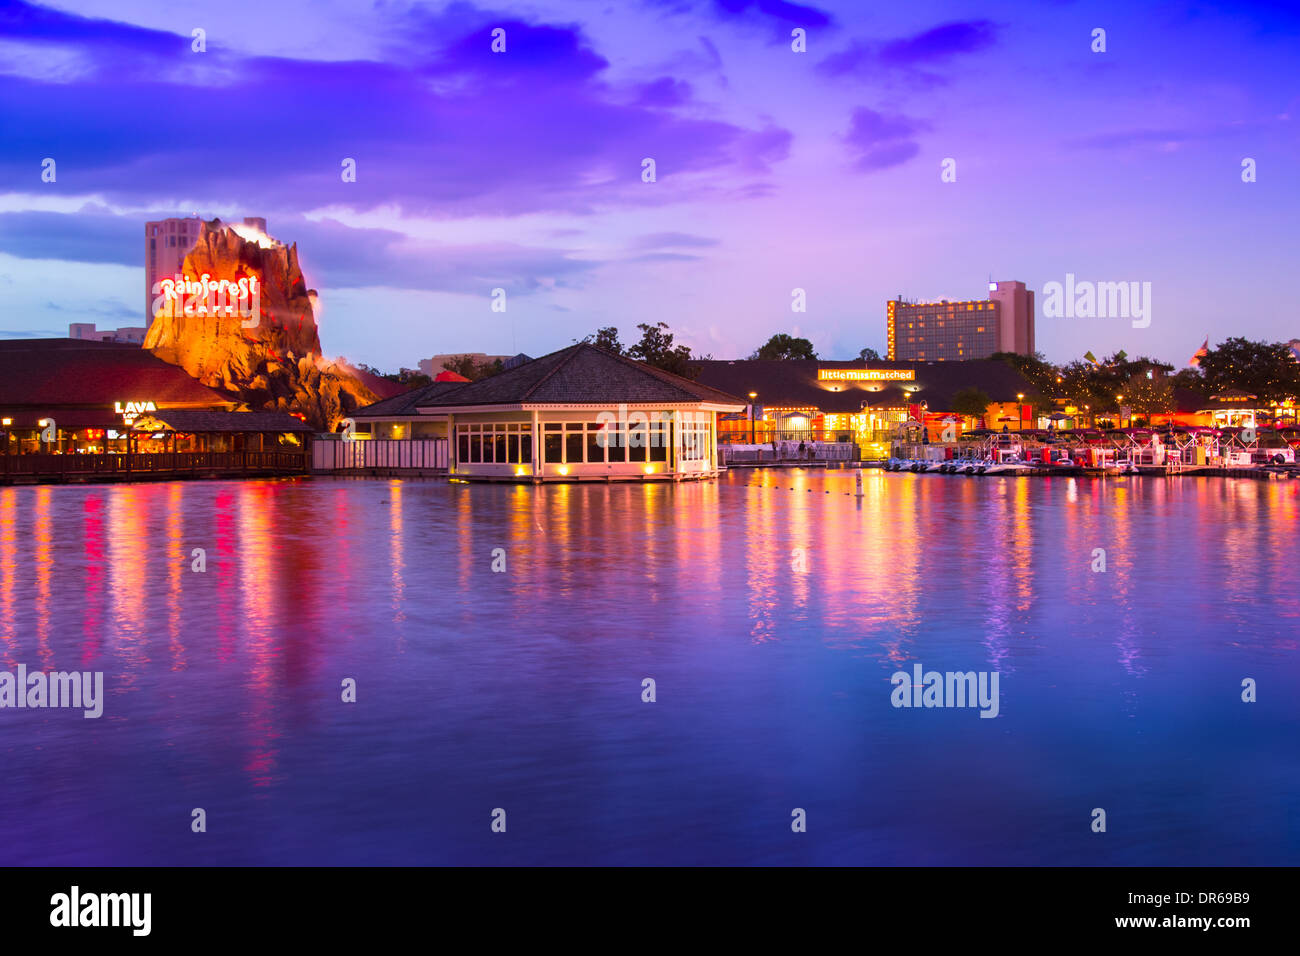 Night view of Walt Disney World Downtown Disney Village in Lake Buena Vista Florida on September 2, 2013. Stock Photo